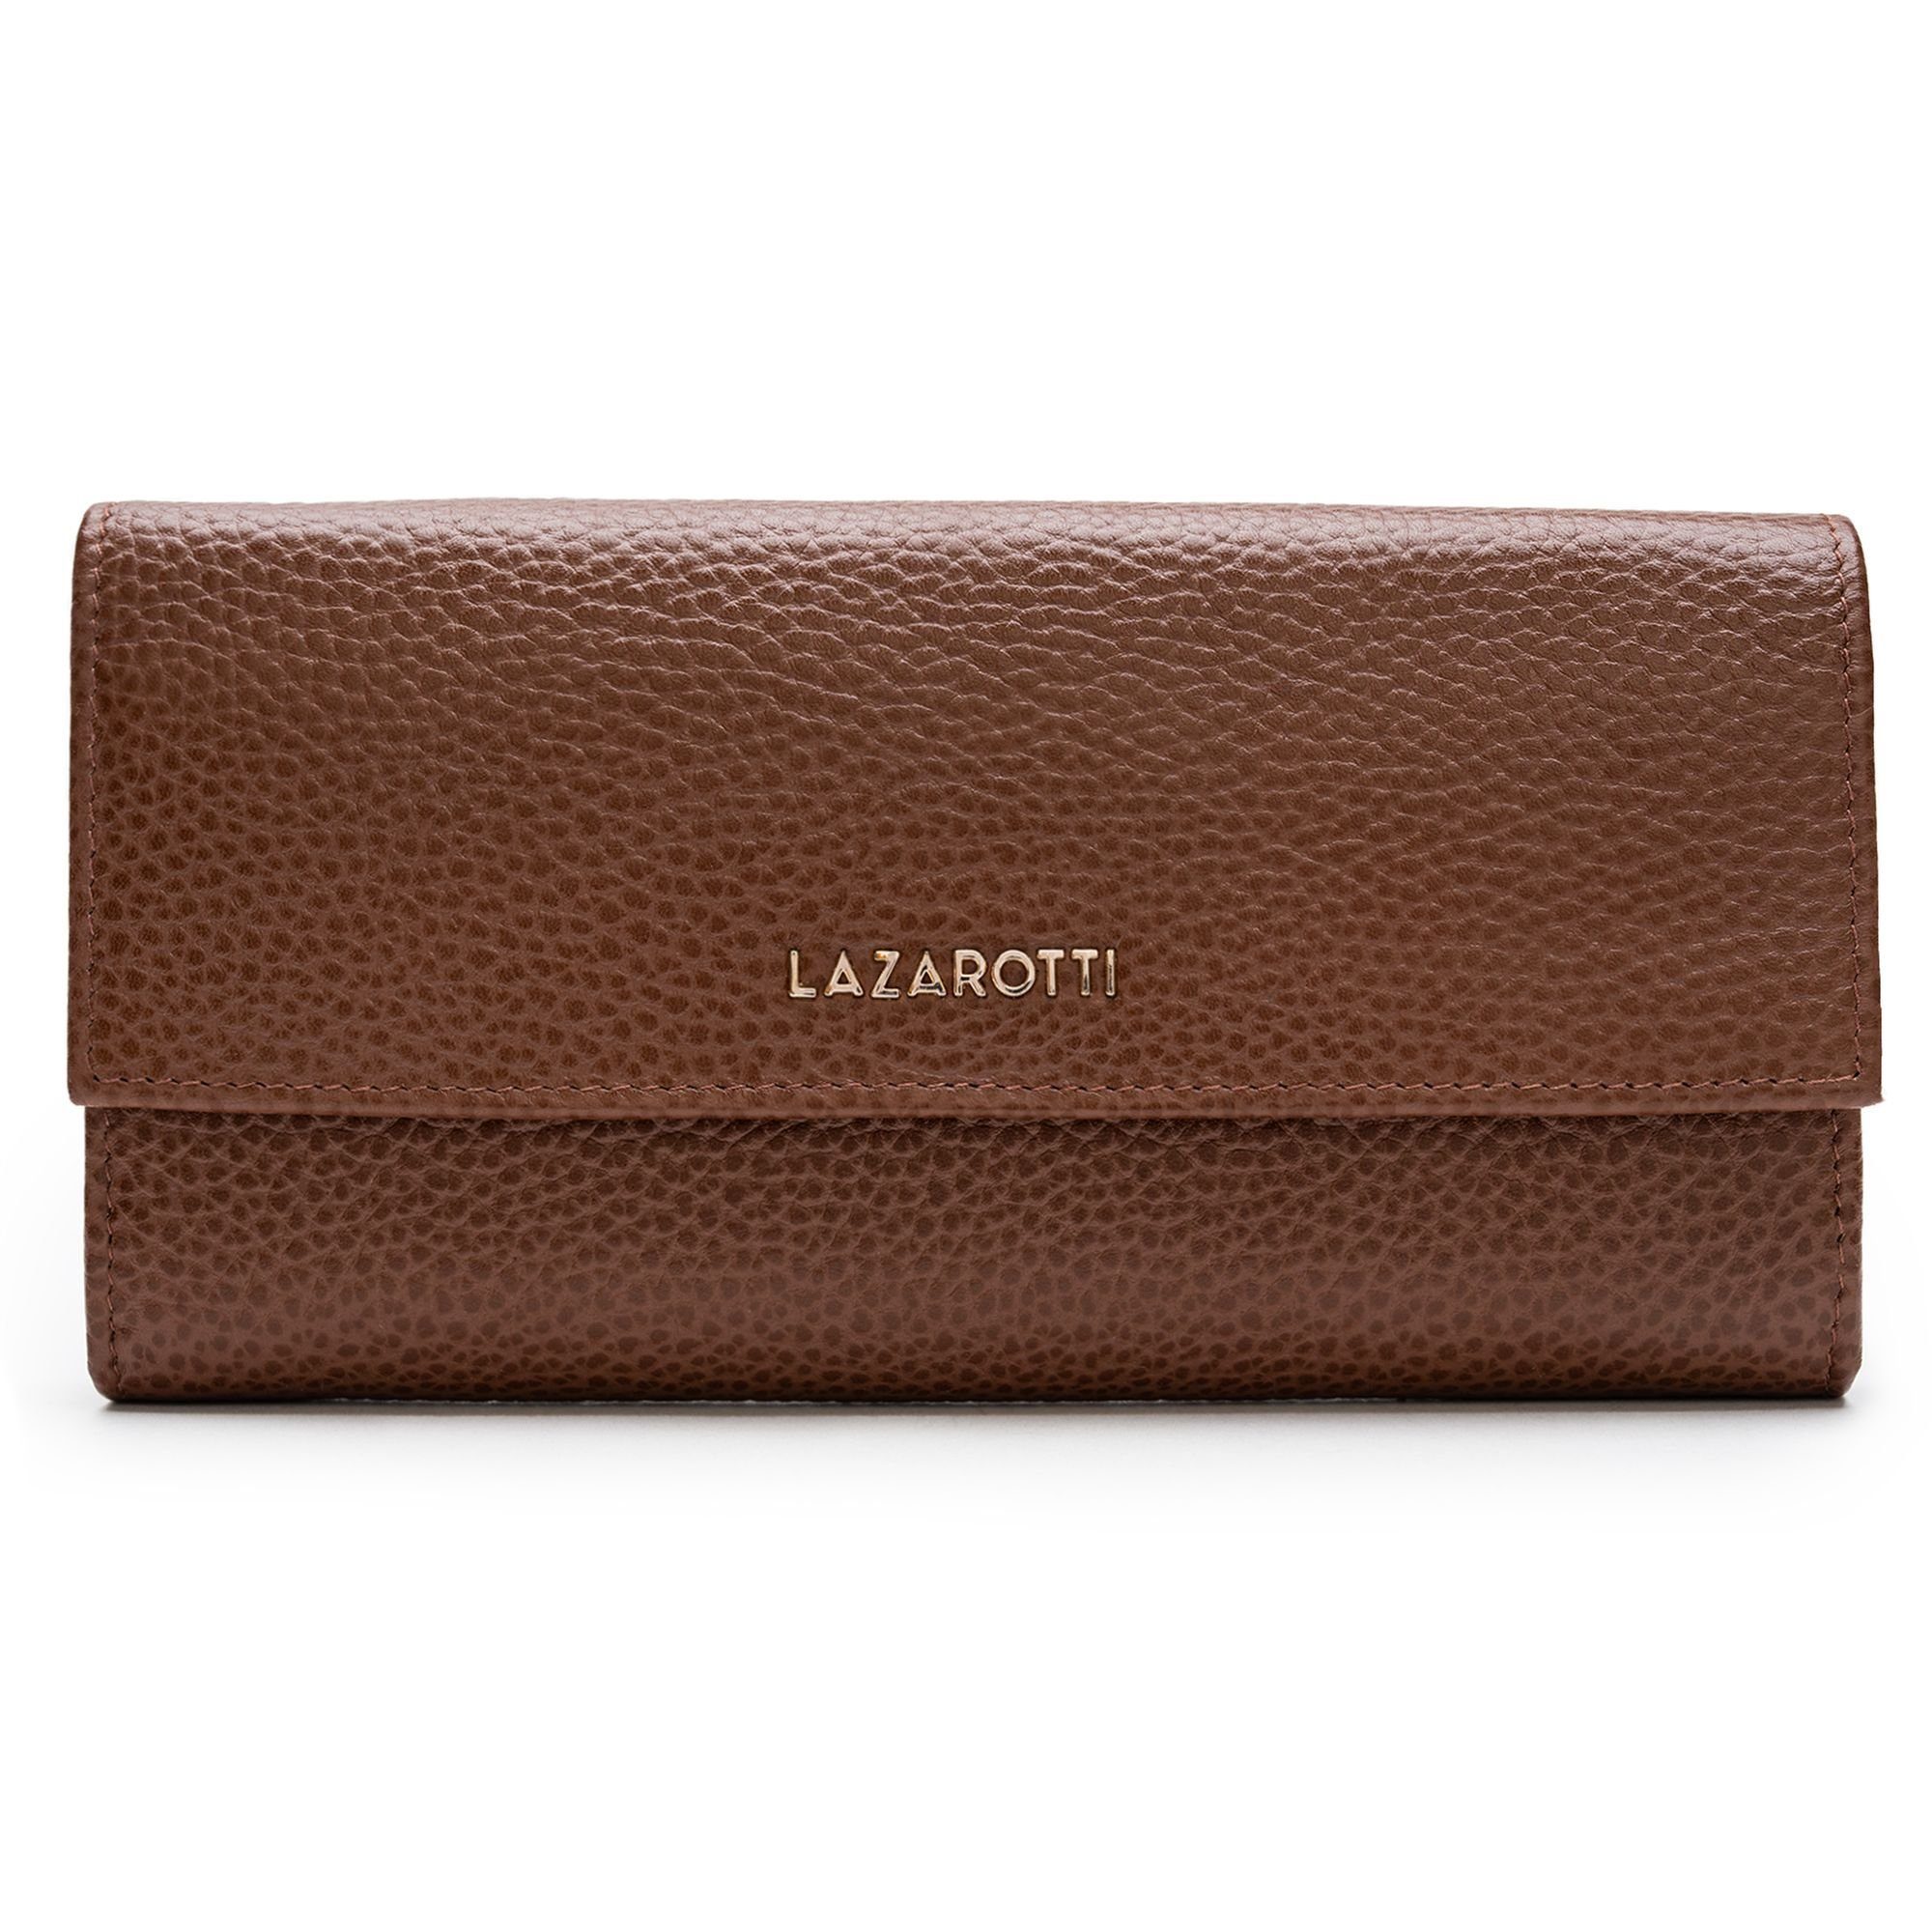 Lazarotti Geldbörse Leather, Bologna Leder brown